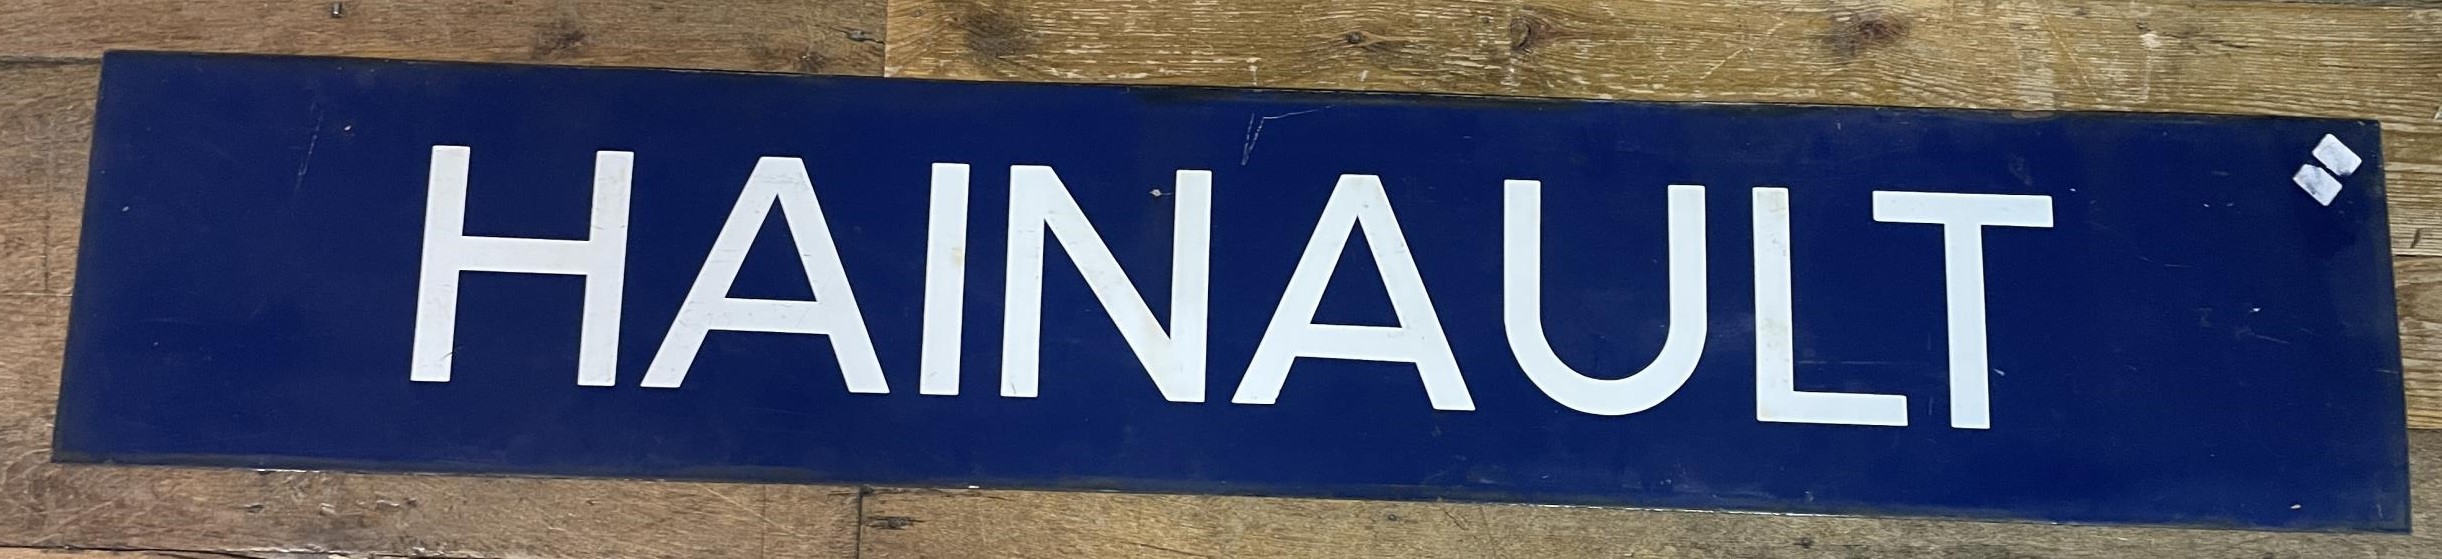 A London Underground enamel sign, Hainault, 27 x 149 cm